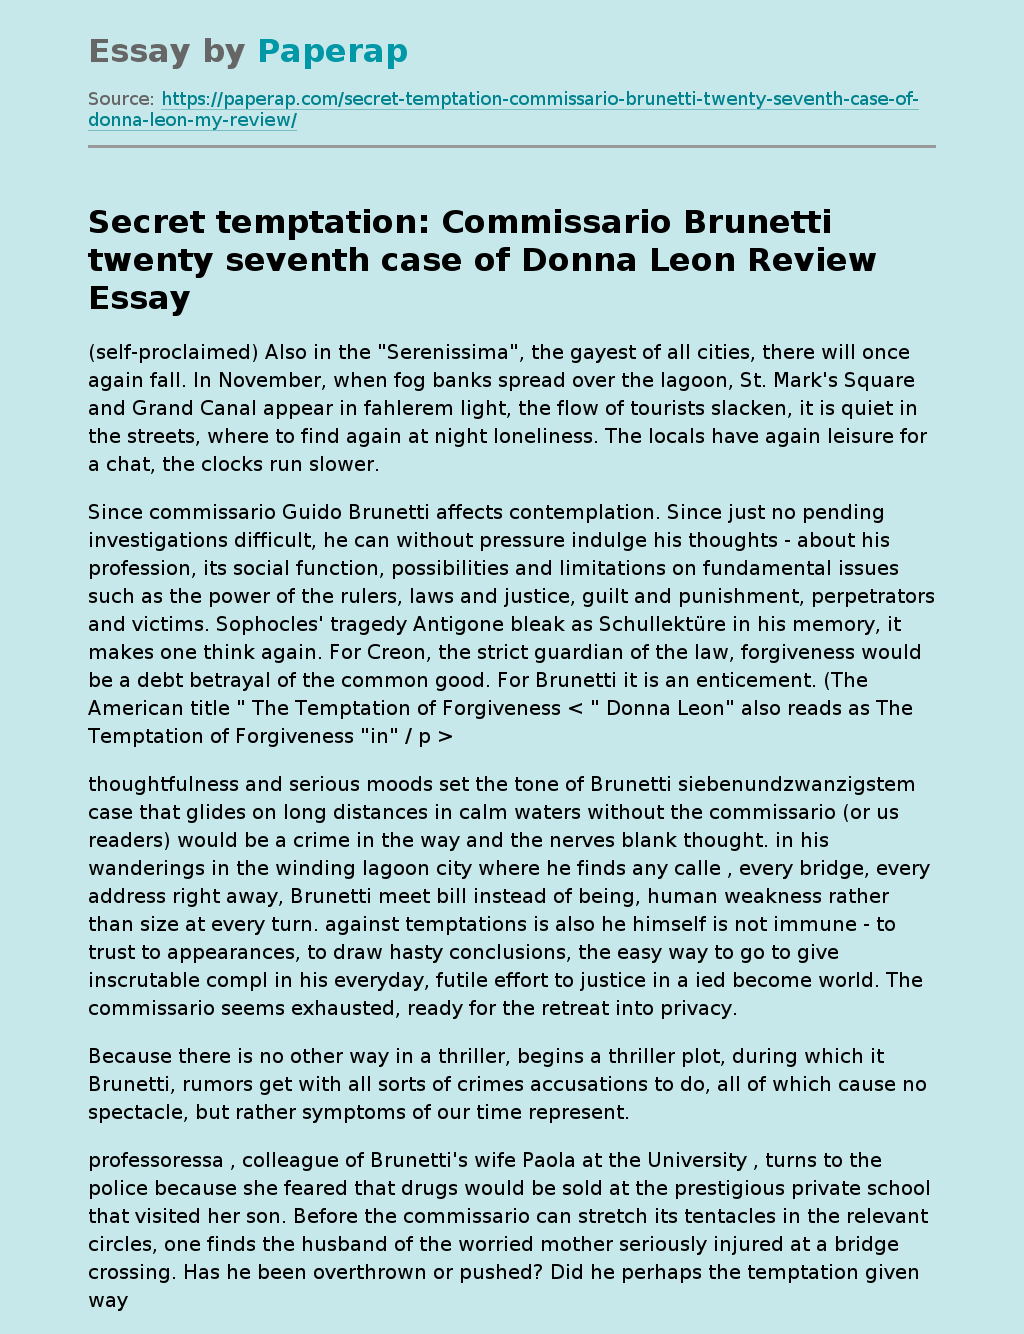 "Secret temptation": Commissario Brunetti twenty seventh case of Donna Leon